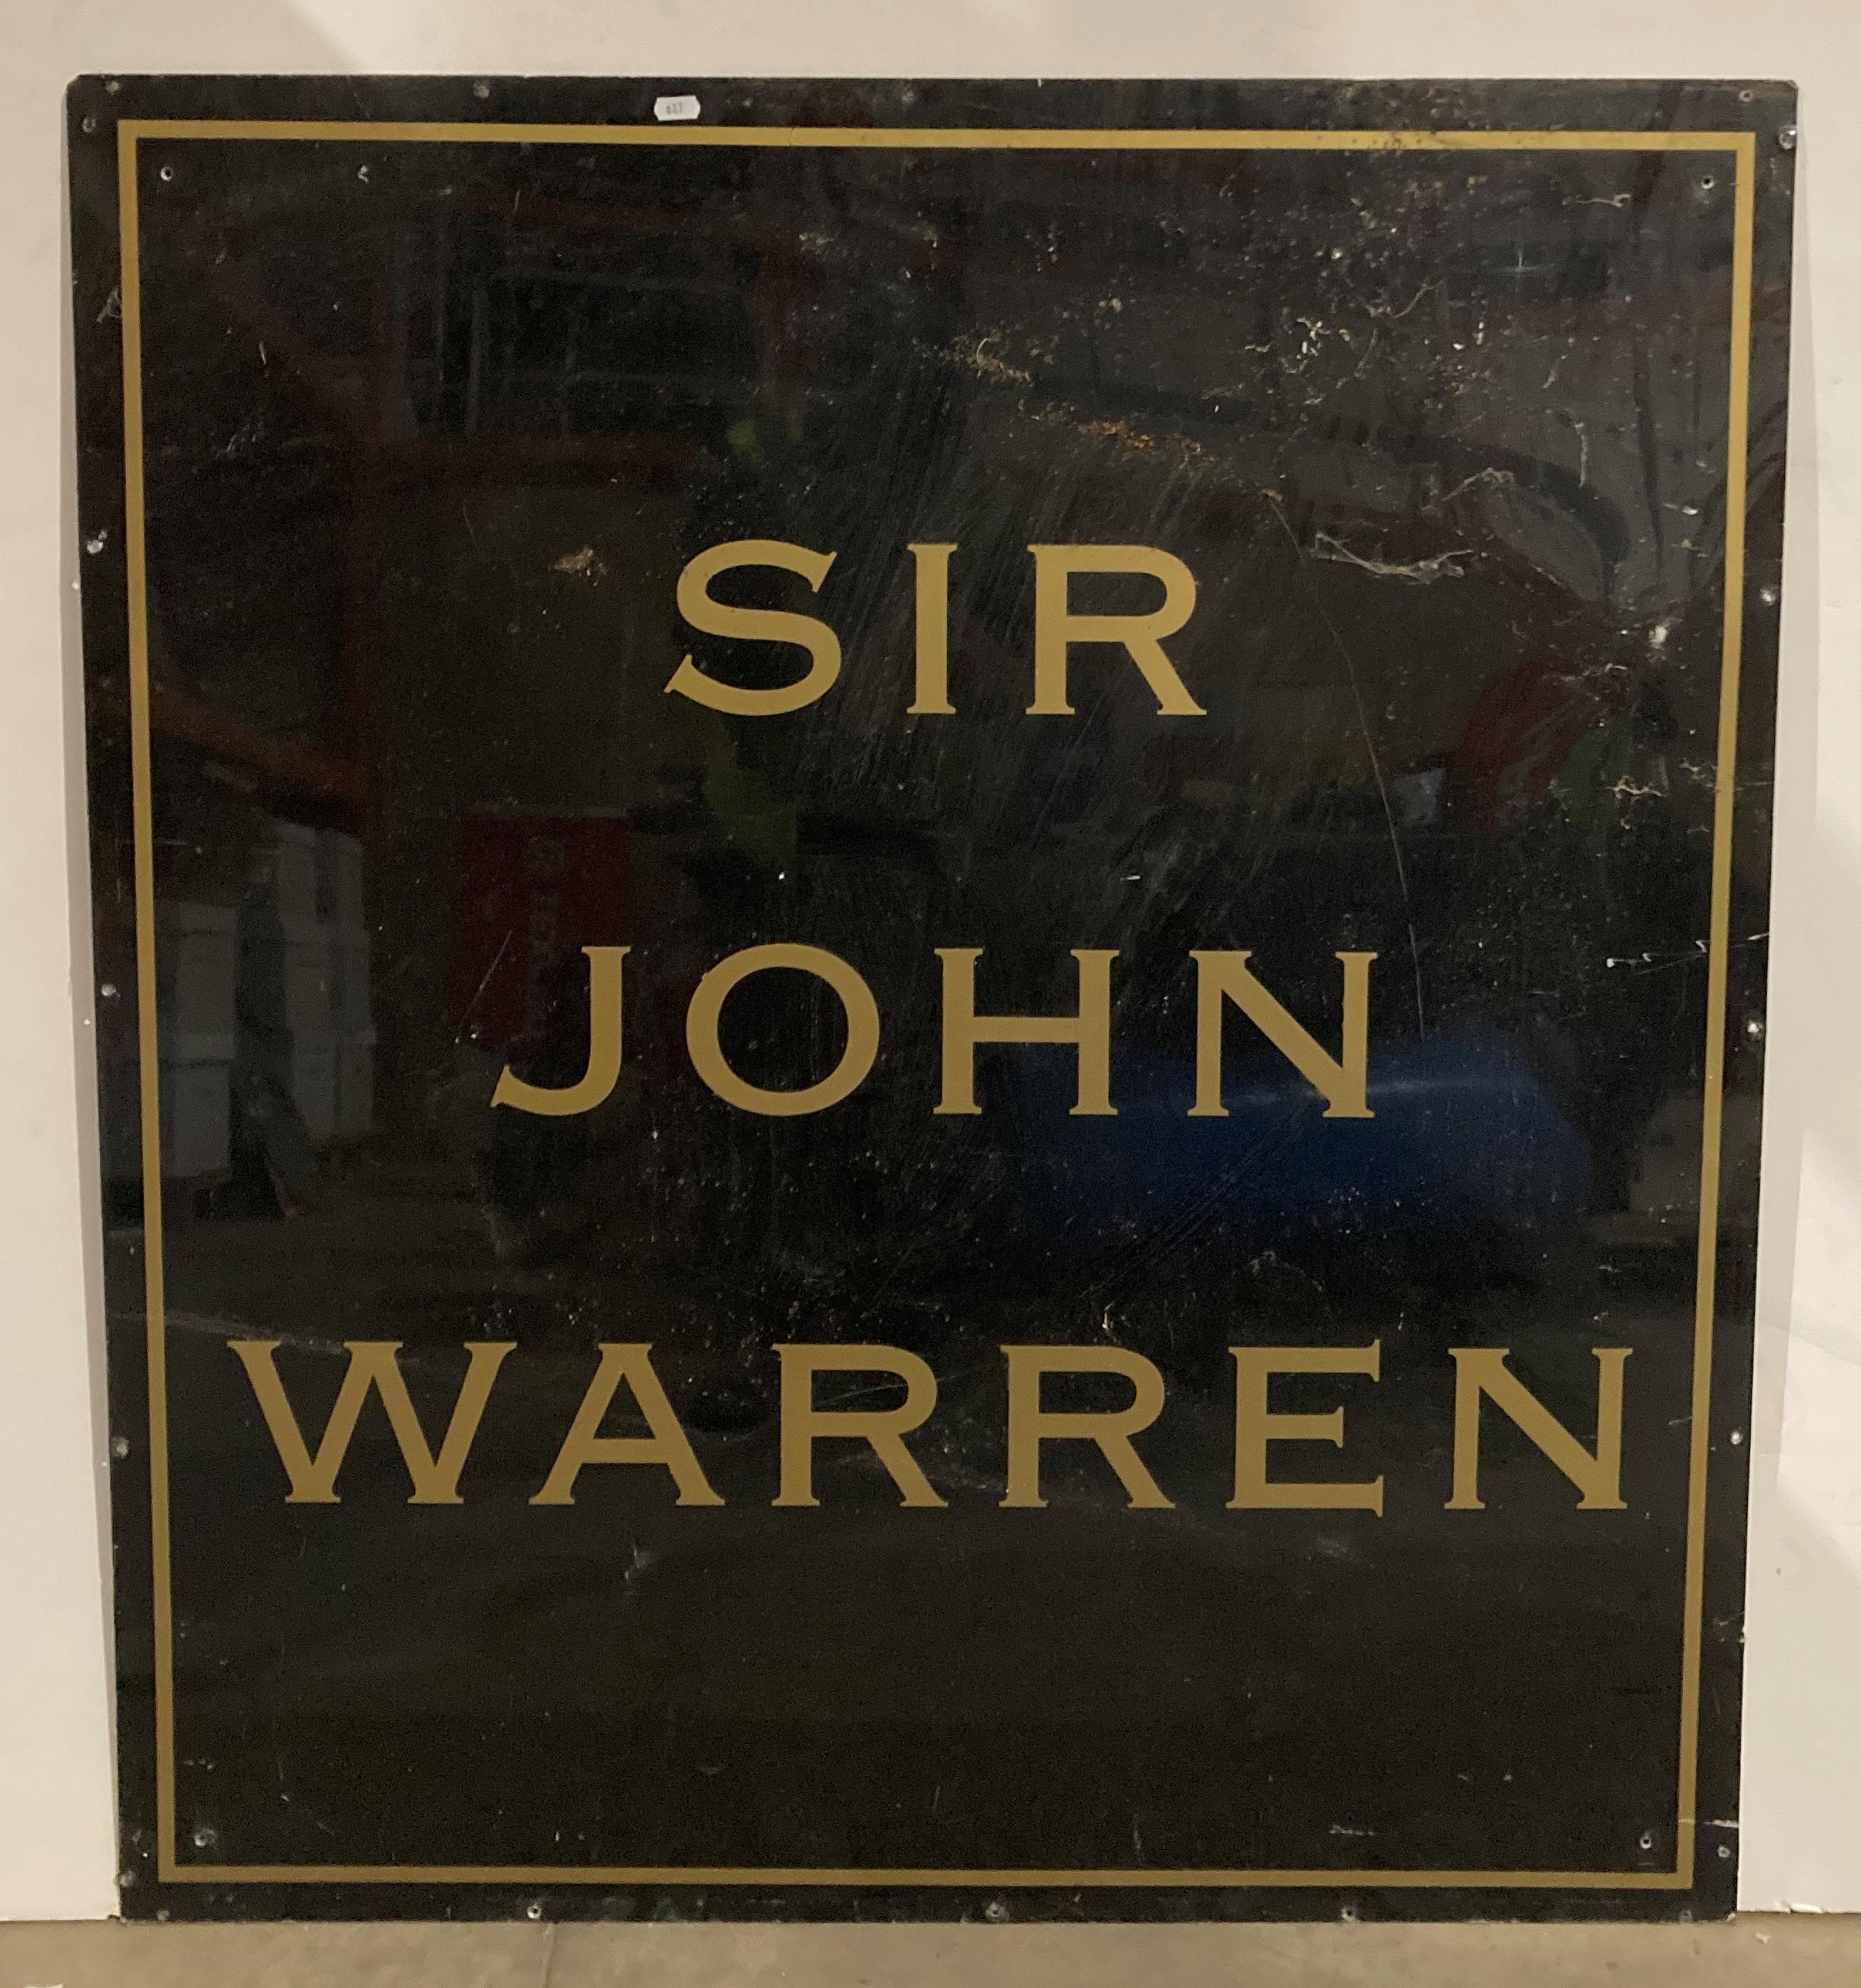 'Sir John Warren' black and gold aluminium coated sign - 112 x 100cm (saleroom location: MA1 wall)